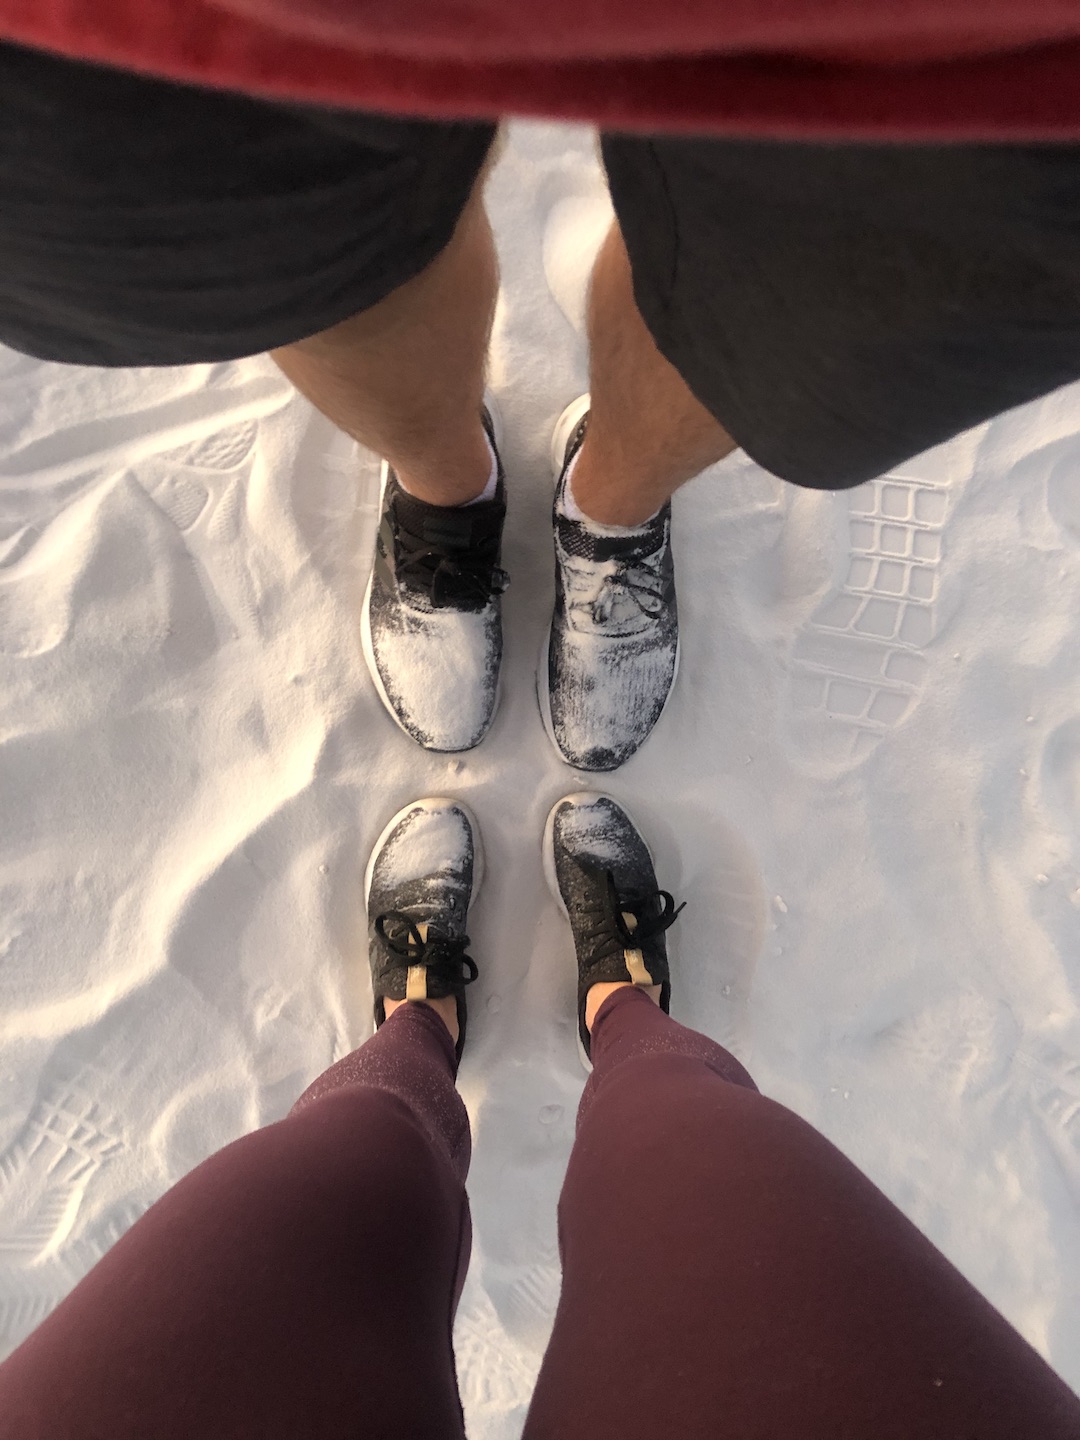 White sand on Ryan and Katy's feet